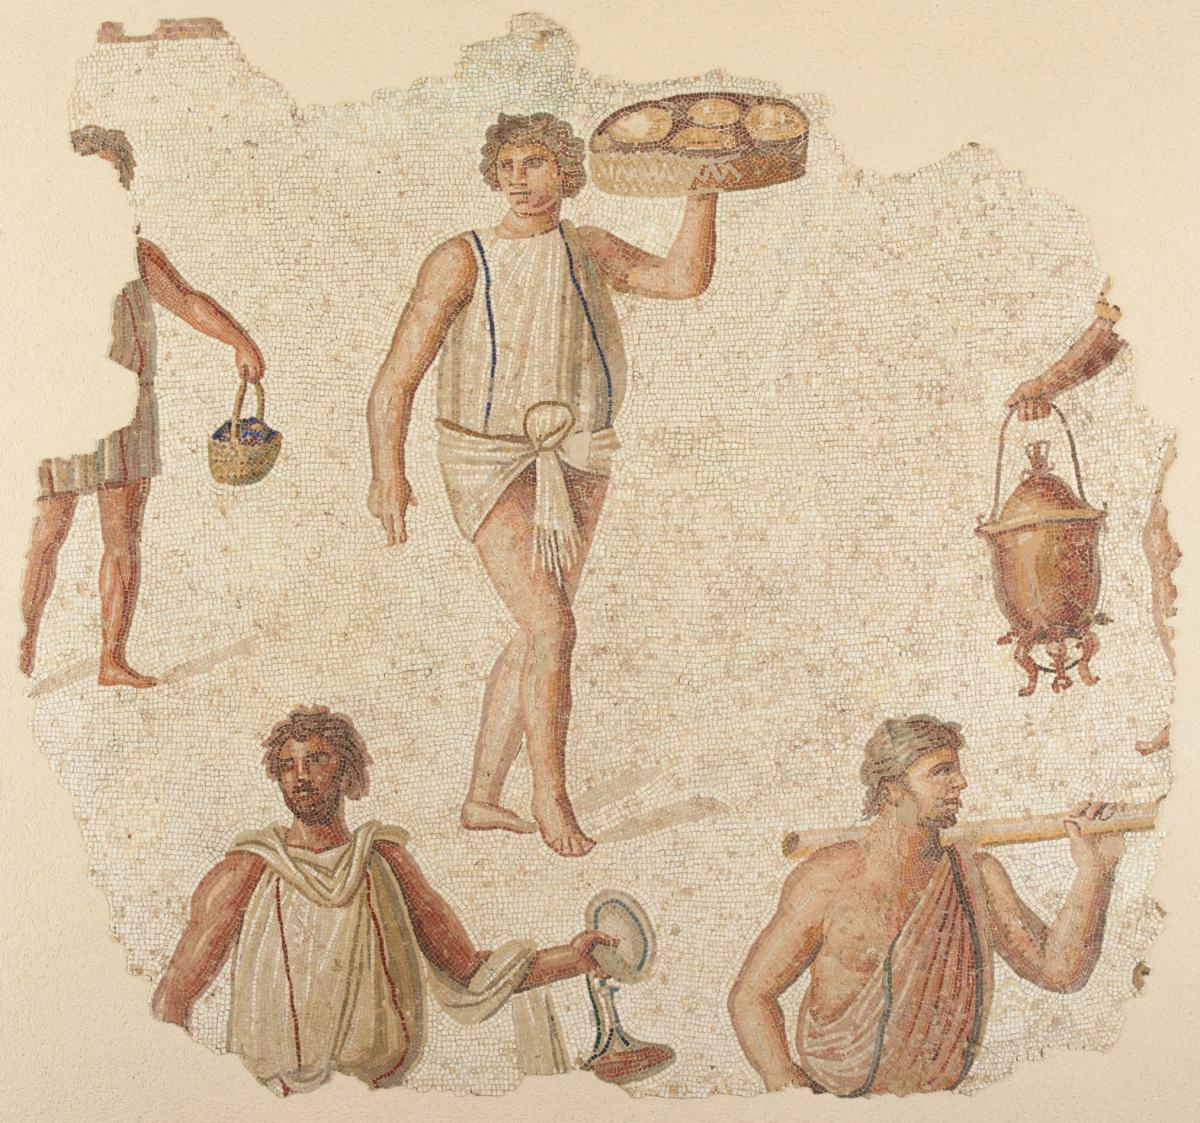 Mosaic of a feast